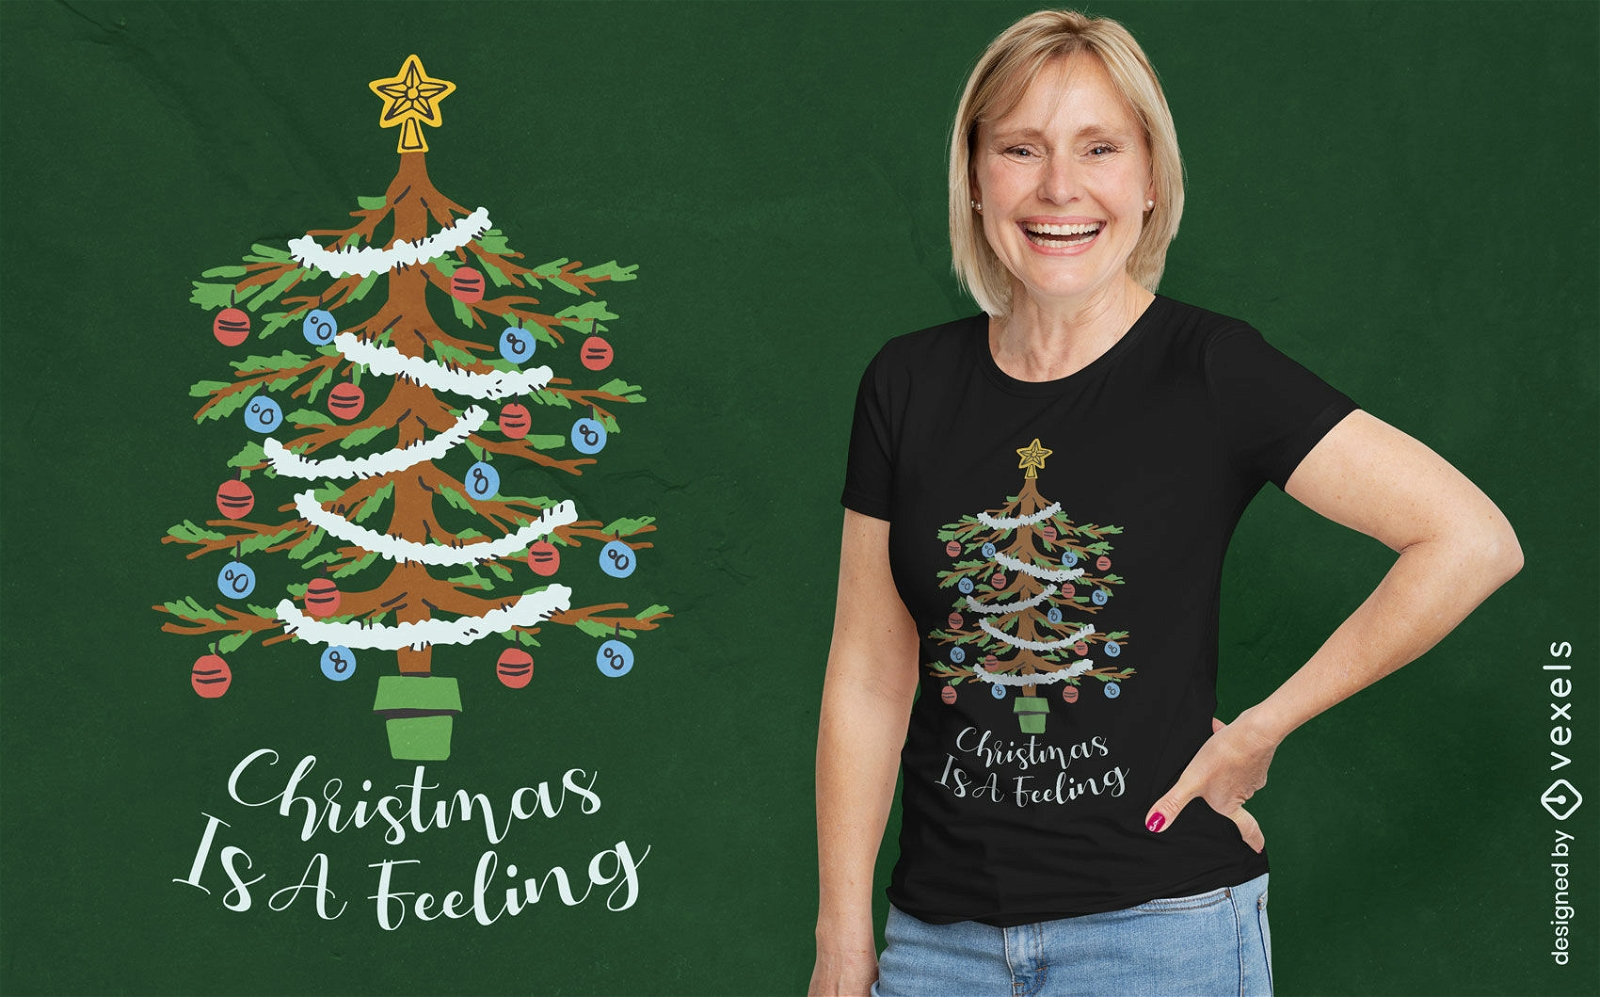 Christmas tree feeling t-shirt design